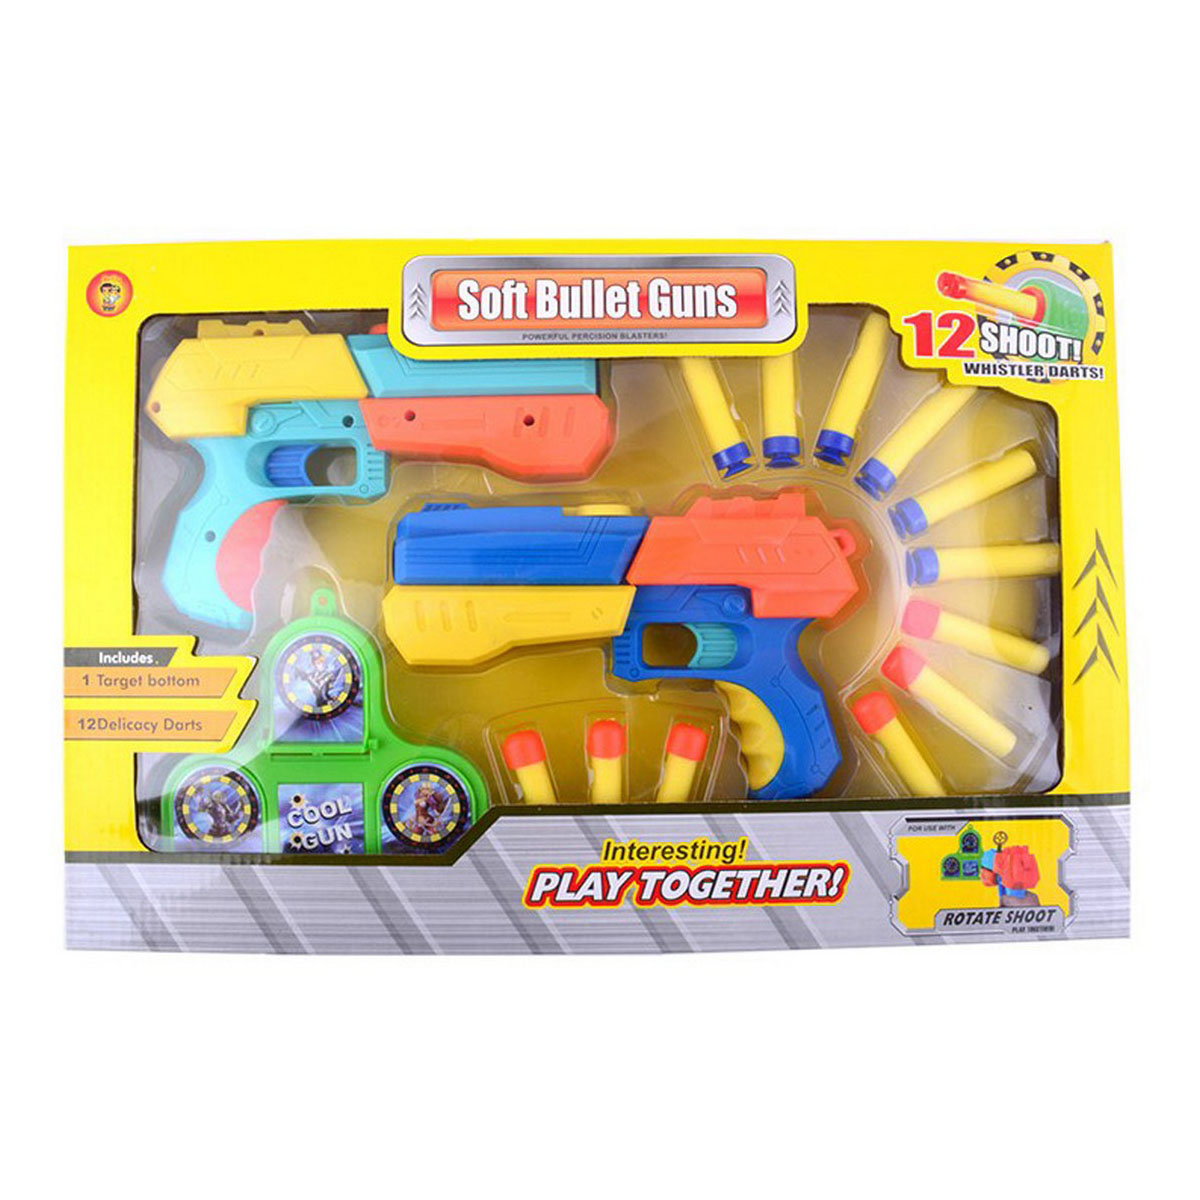 Kids Toy Gun with Soft Bullet